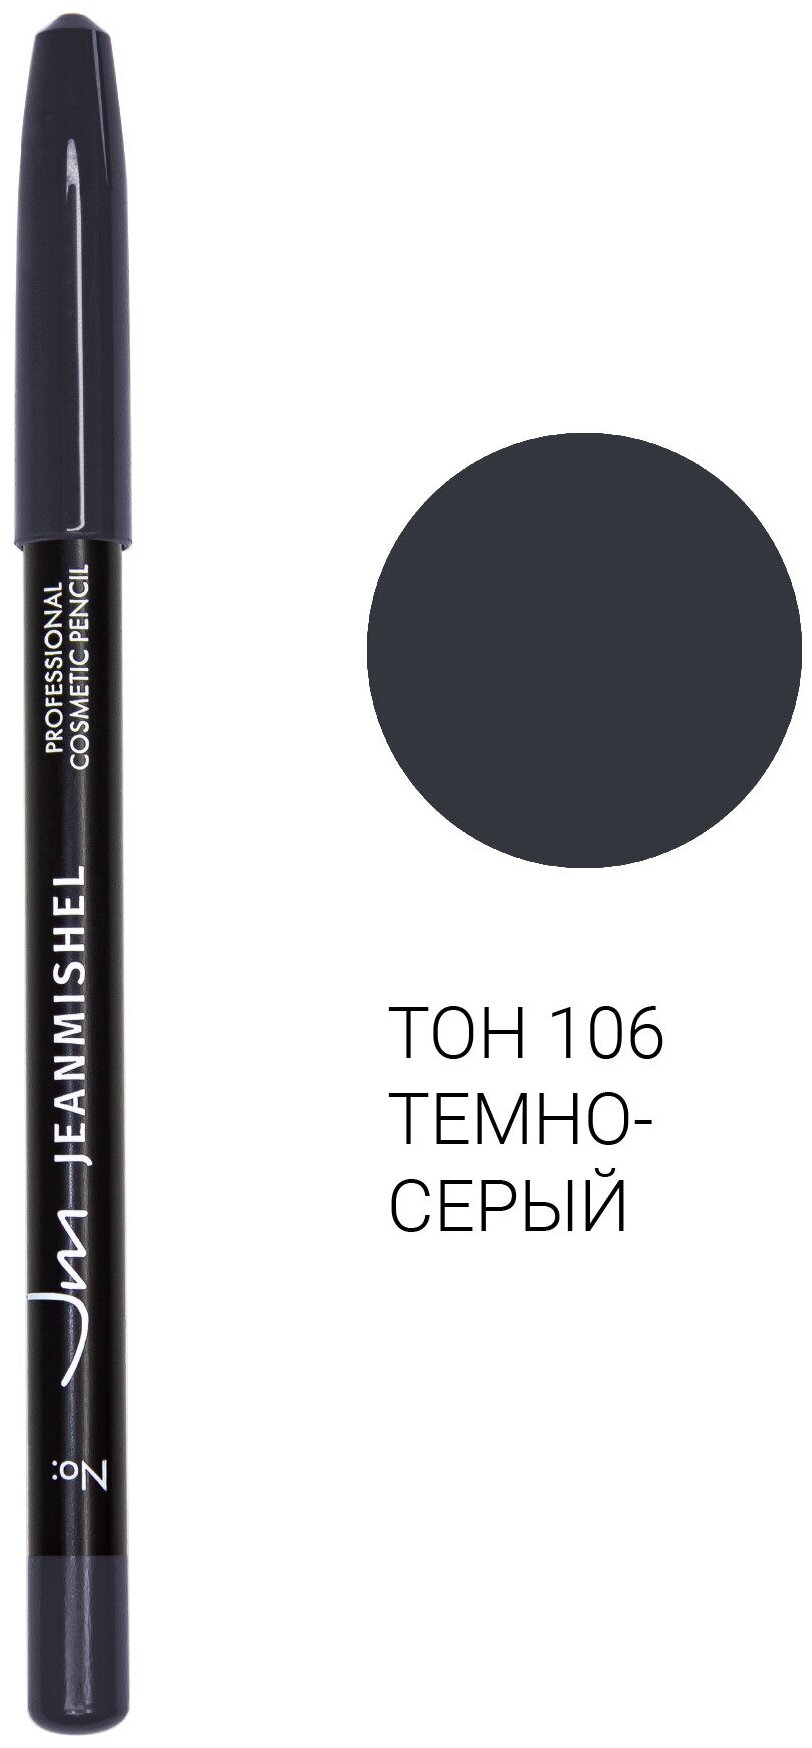 Jeanmishel Косметический карандаш для глаз Professional COSMETIC PENCIL, оттенок 106